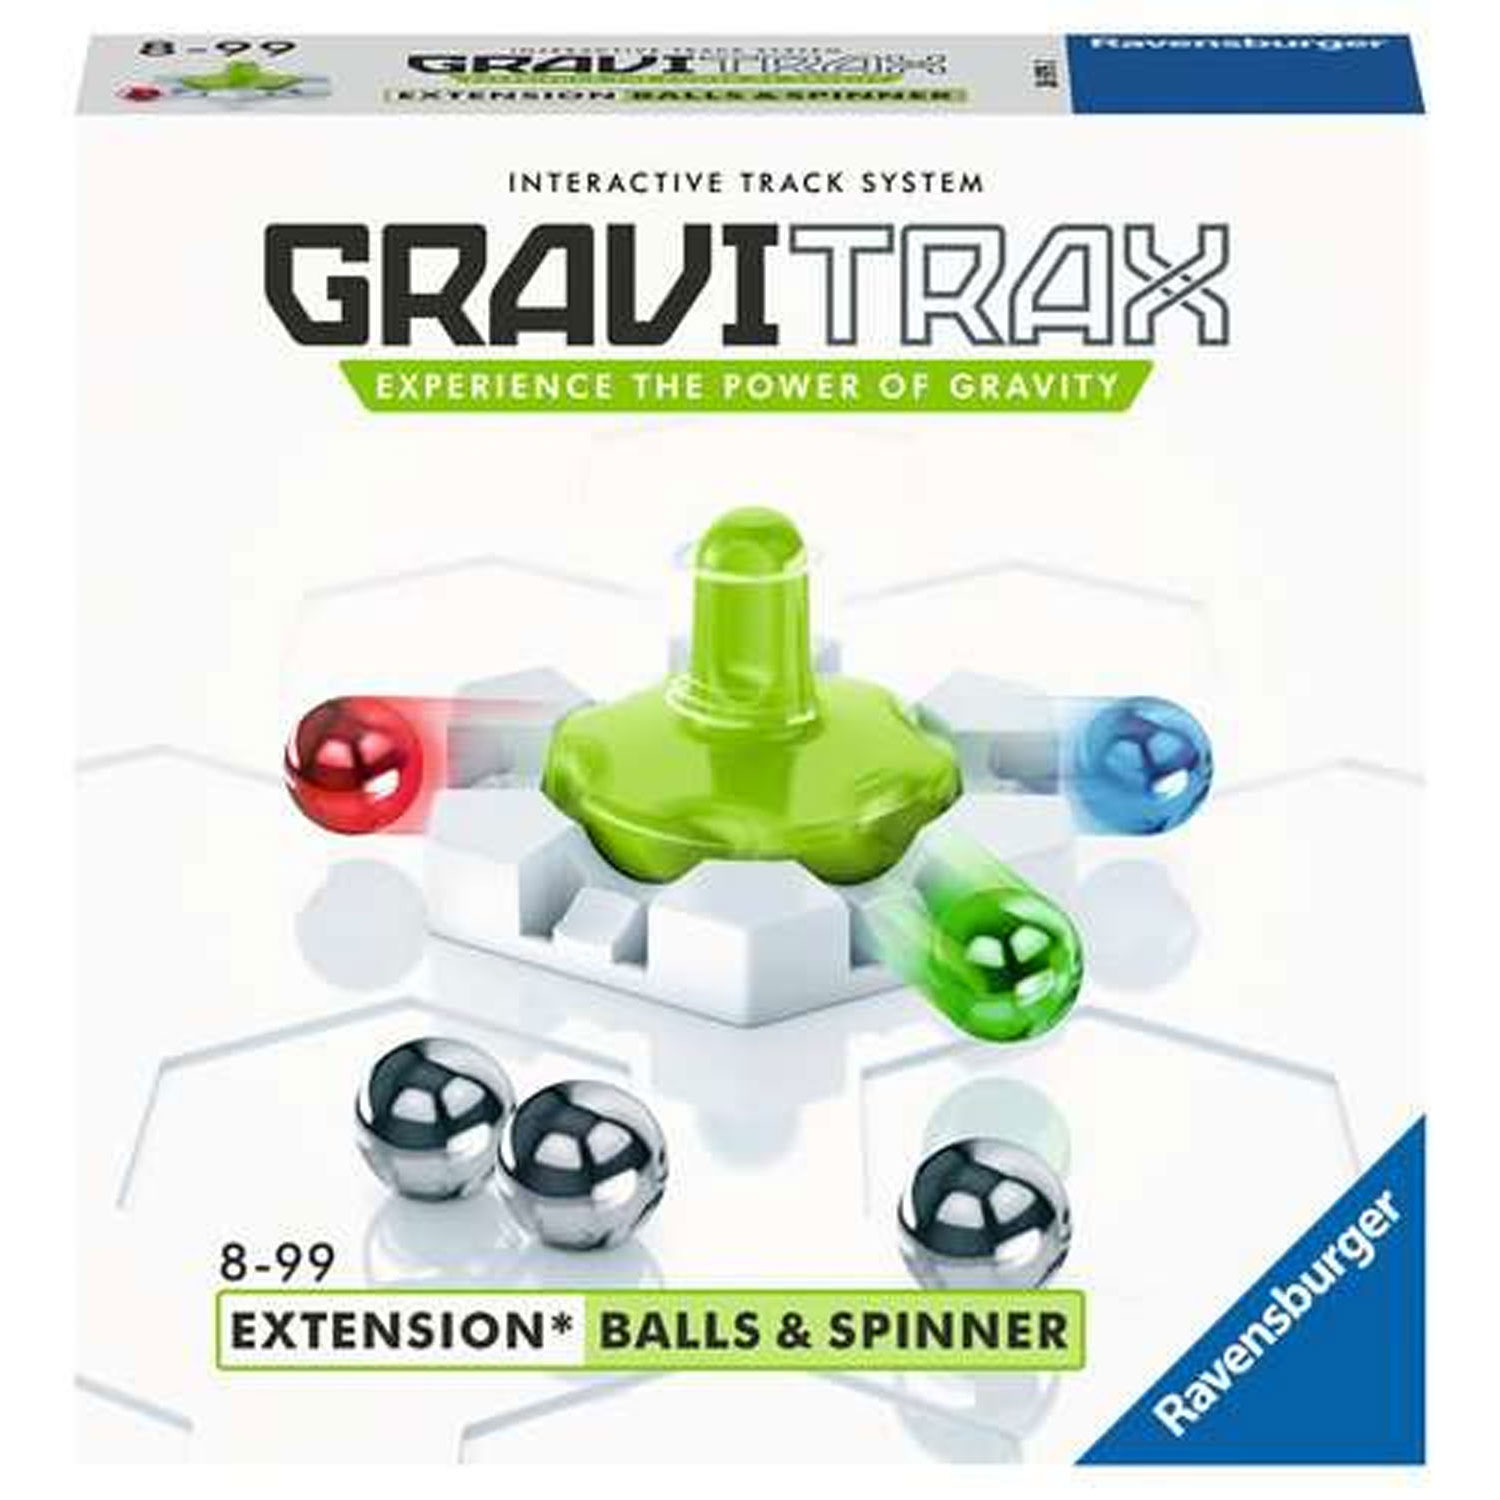 Gravitrax expansion sets